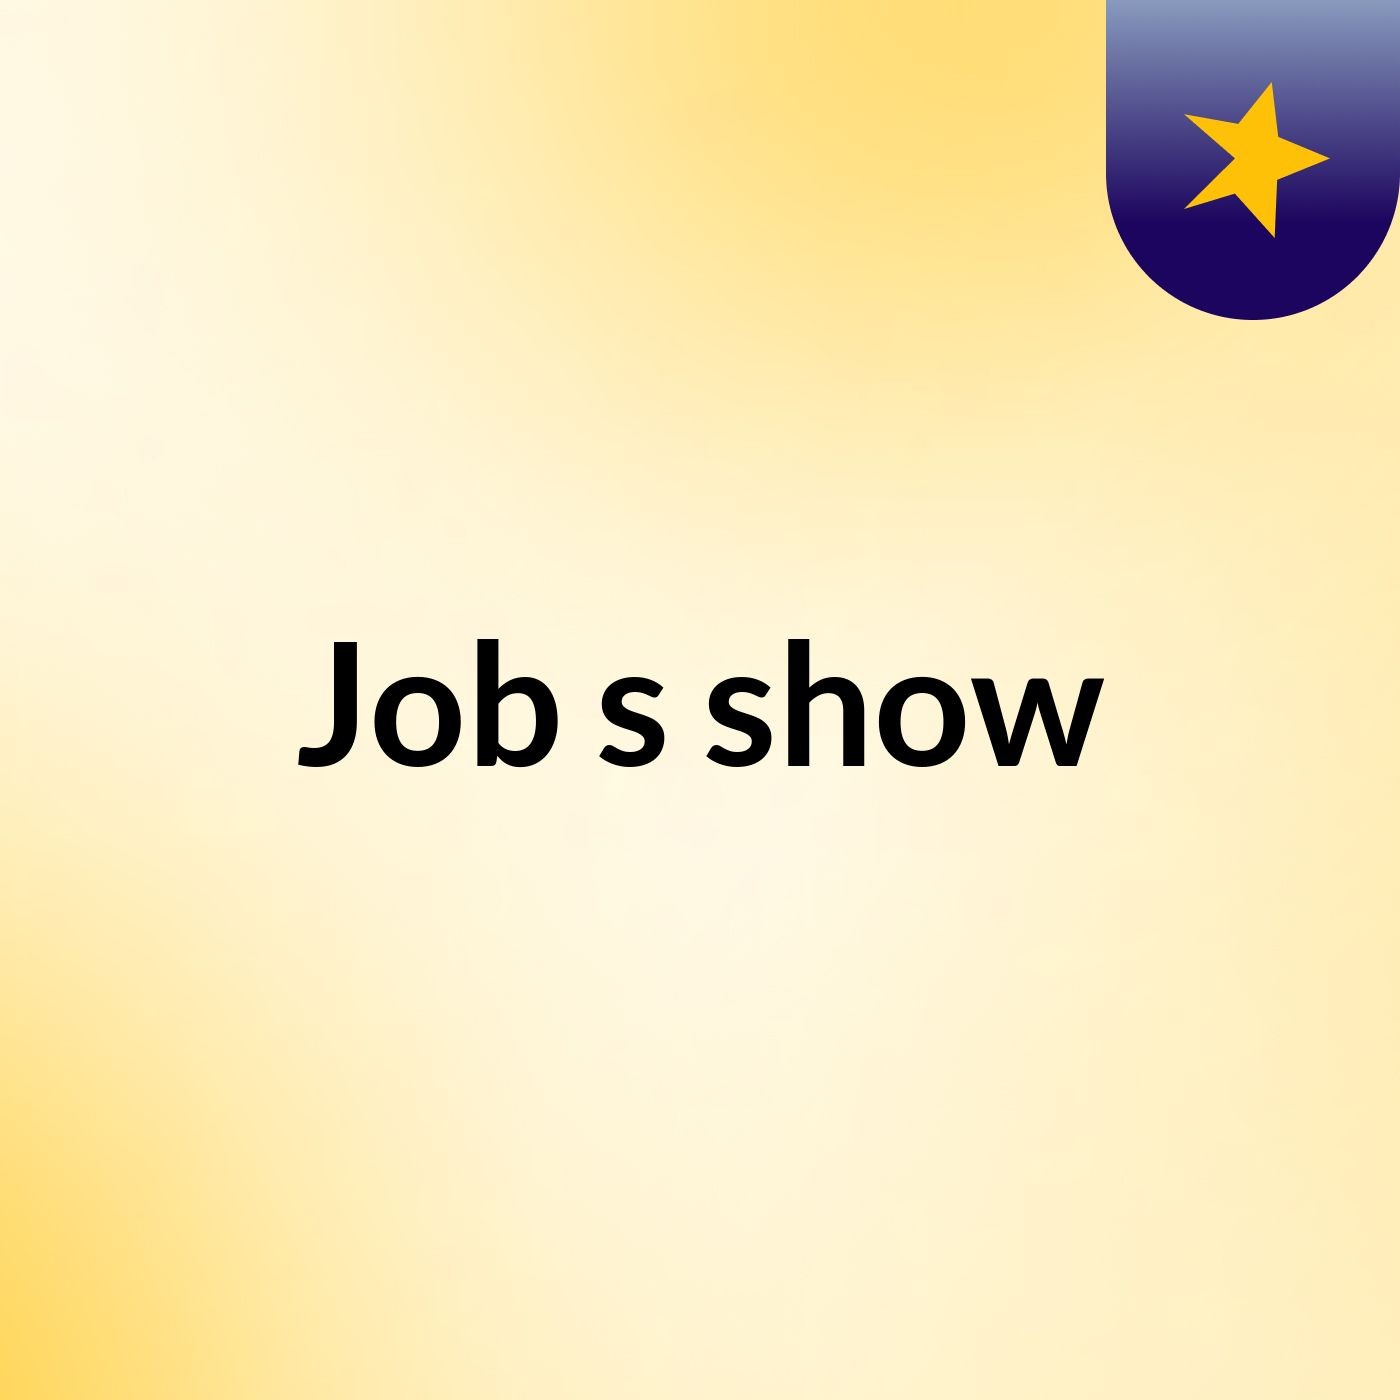 Job's show